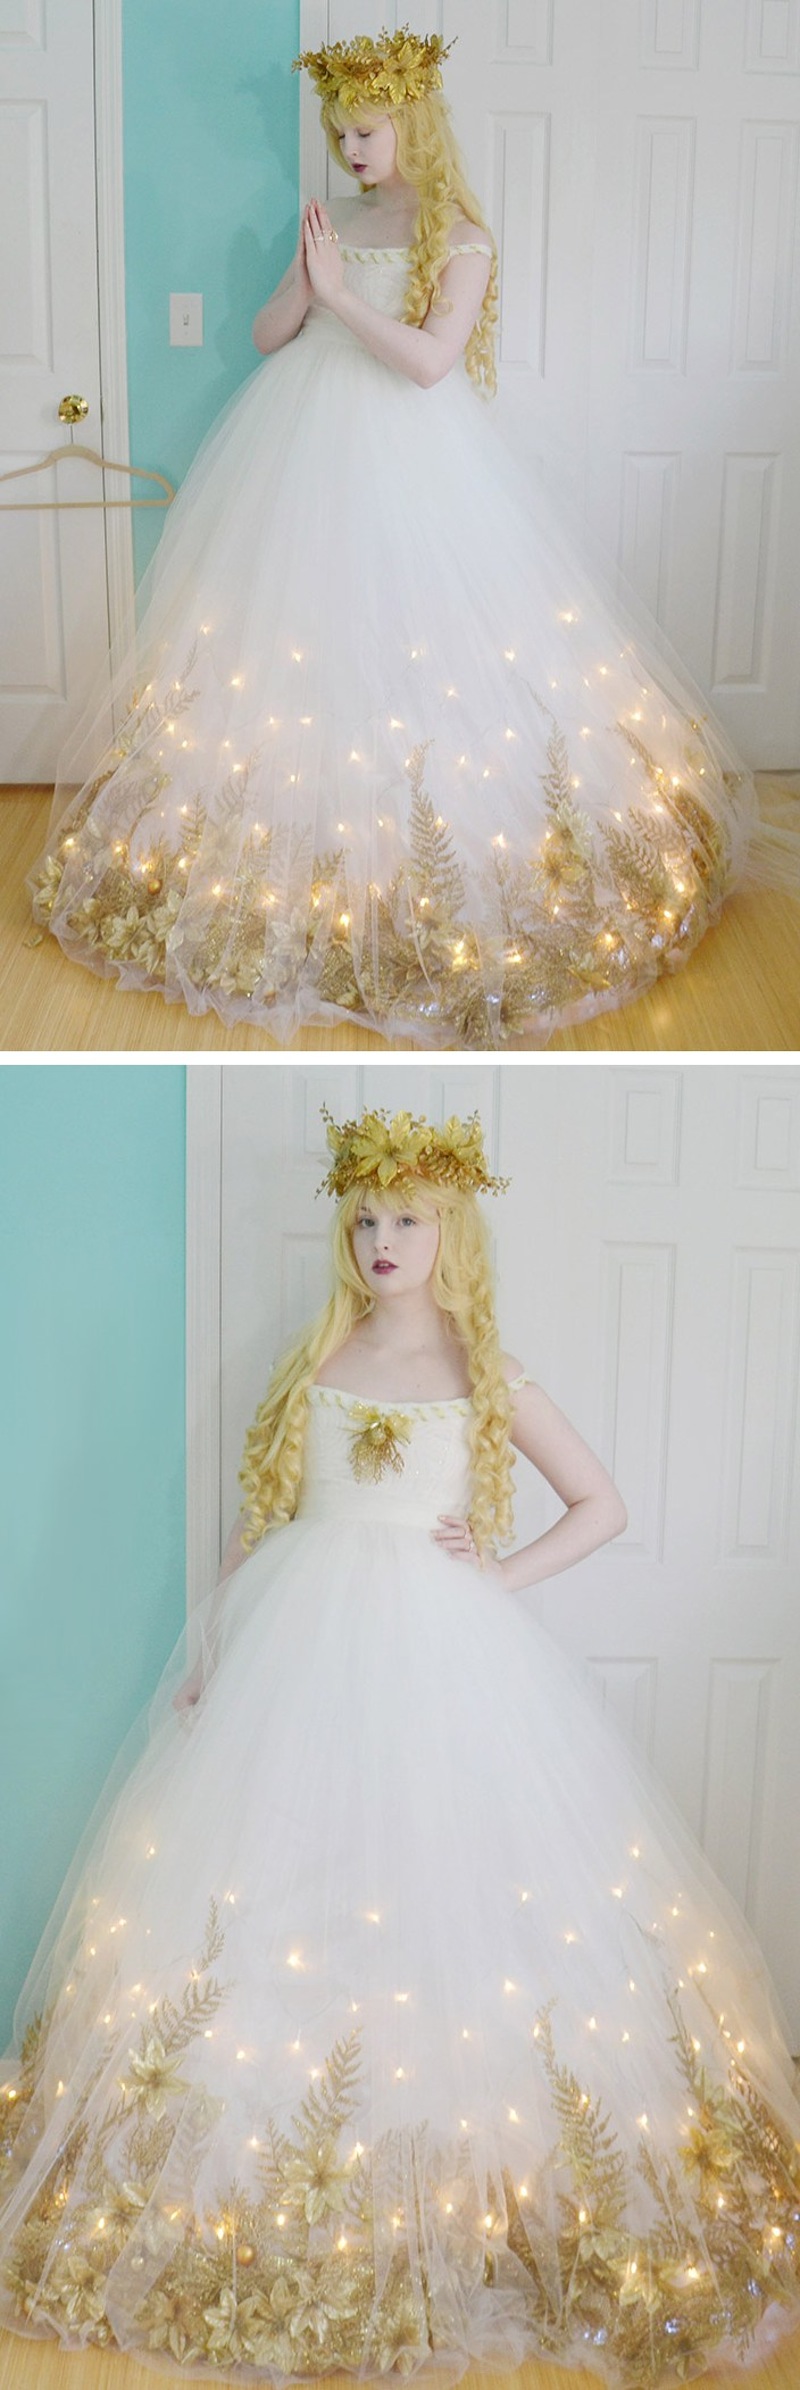 Diy light up fairy dress